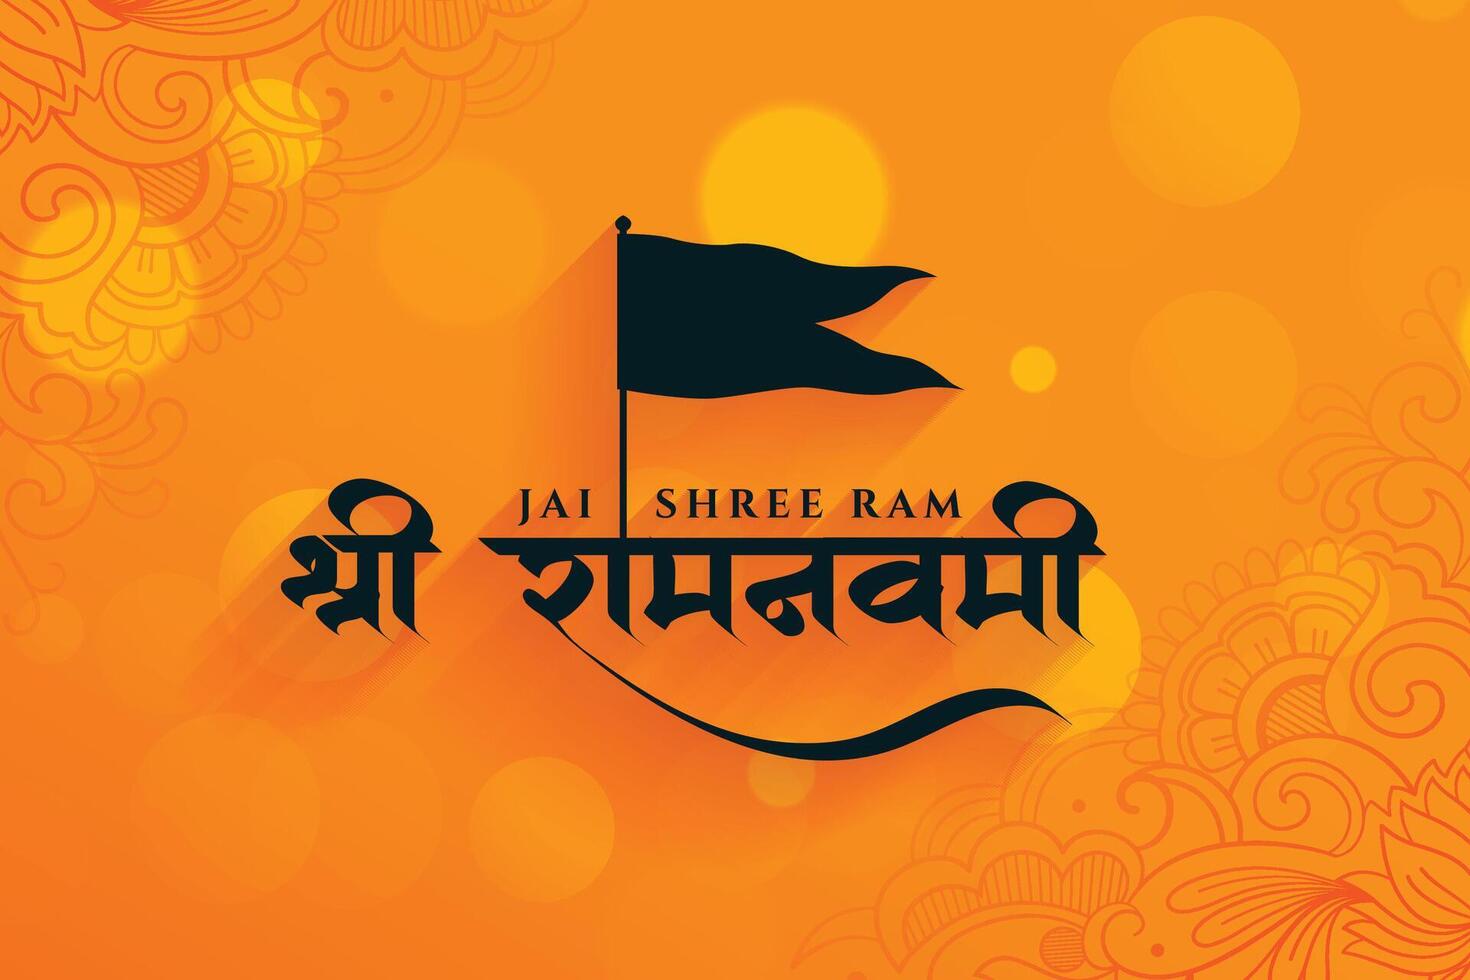 jai shree ram navami festive background with flag design vector